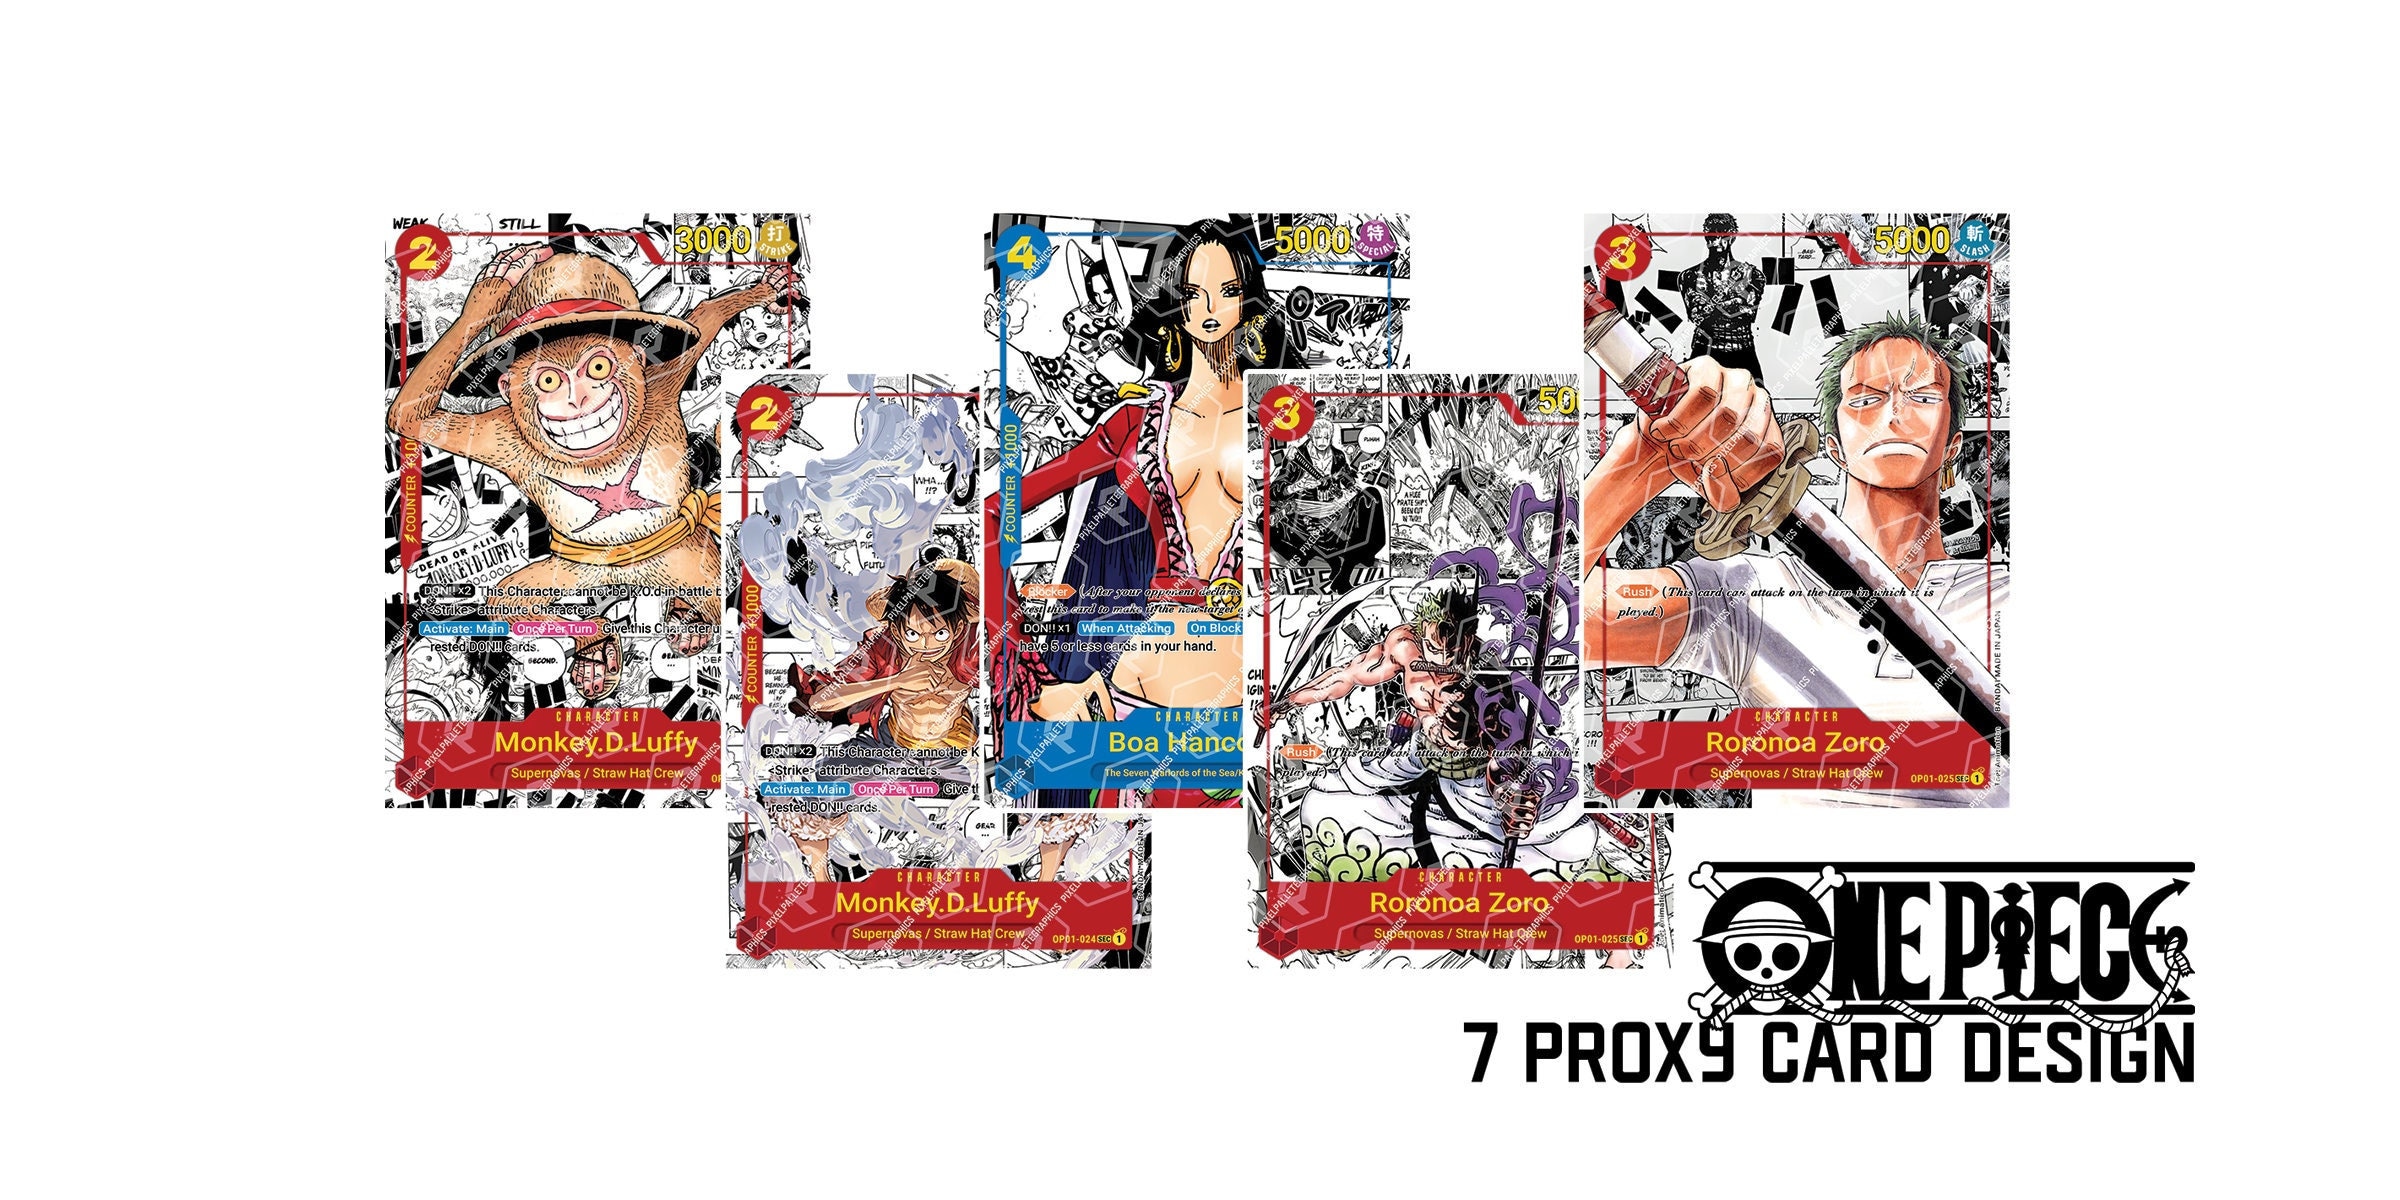 One Piece TCG decks, results, proxy and more. - NakamaDecks